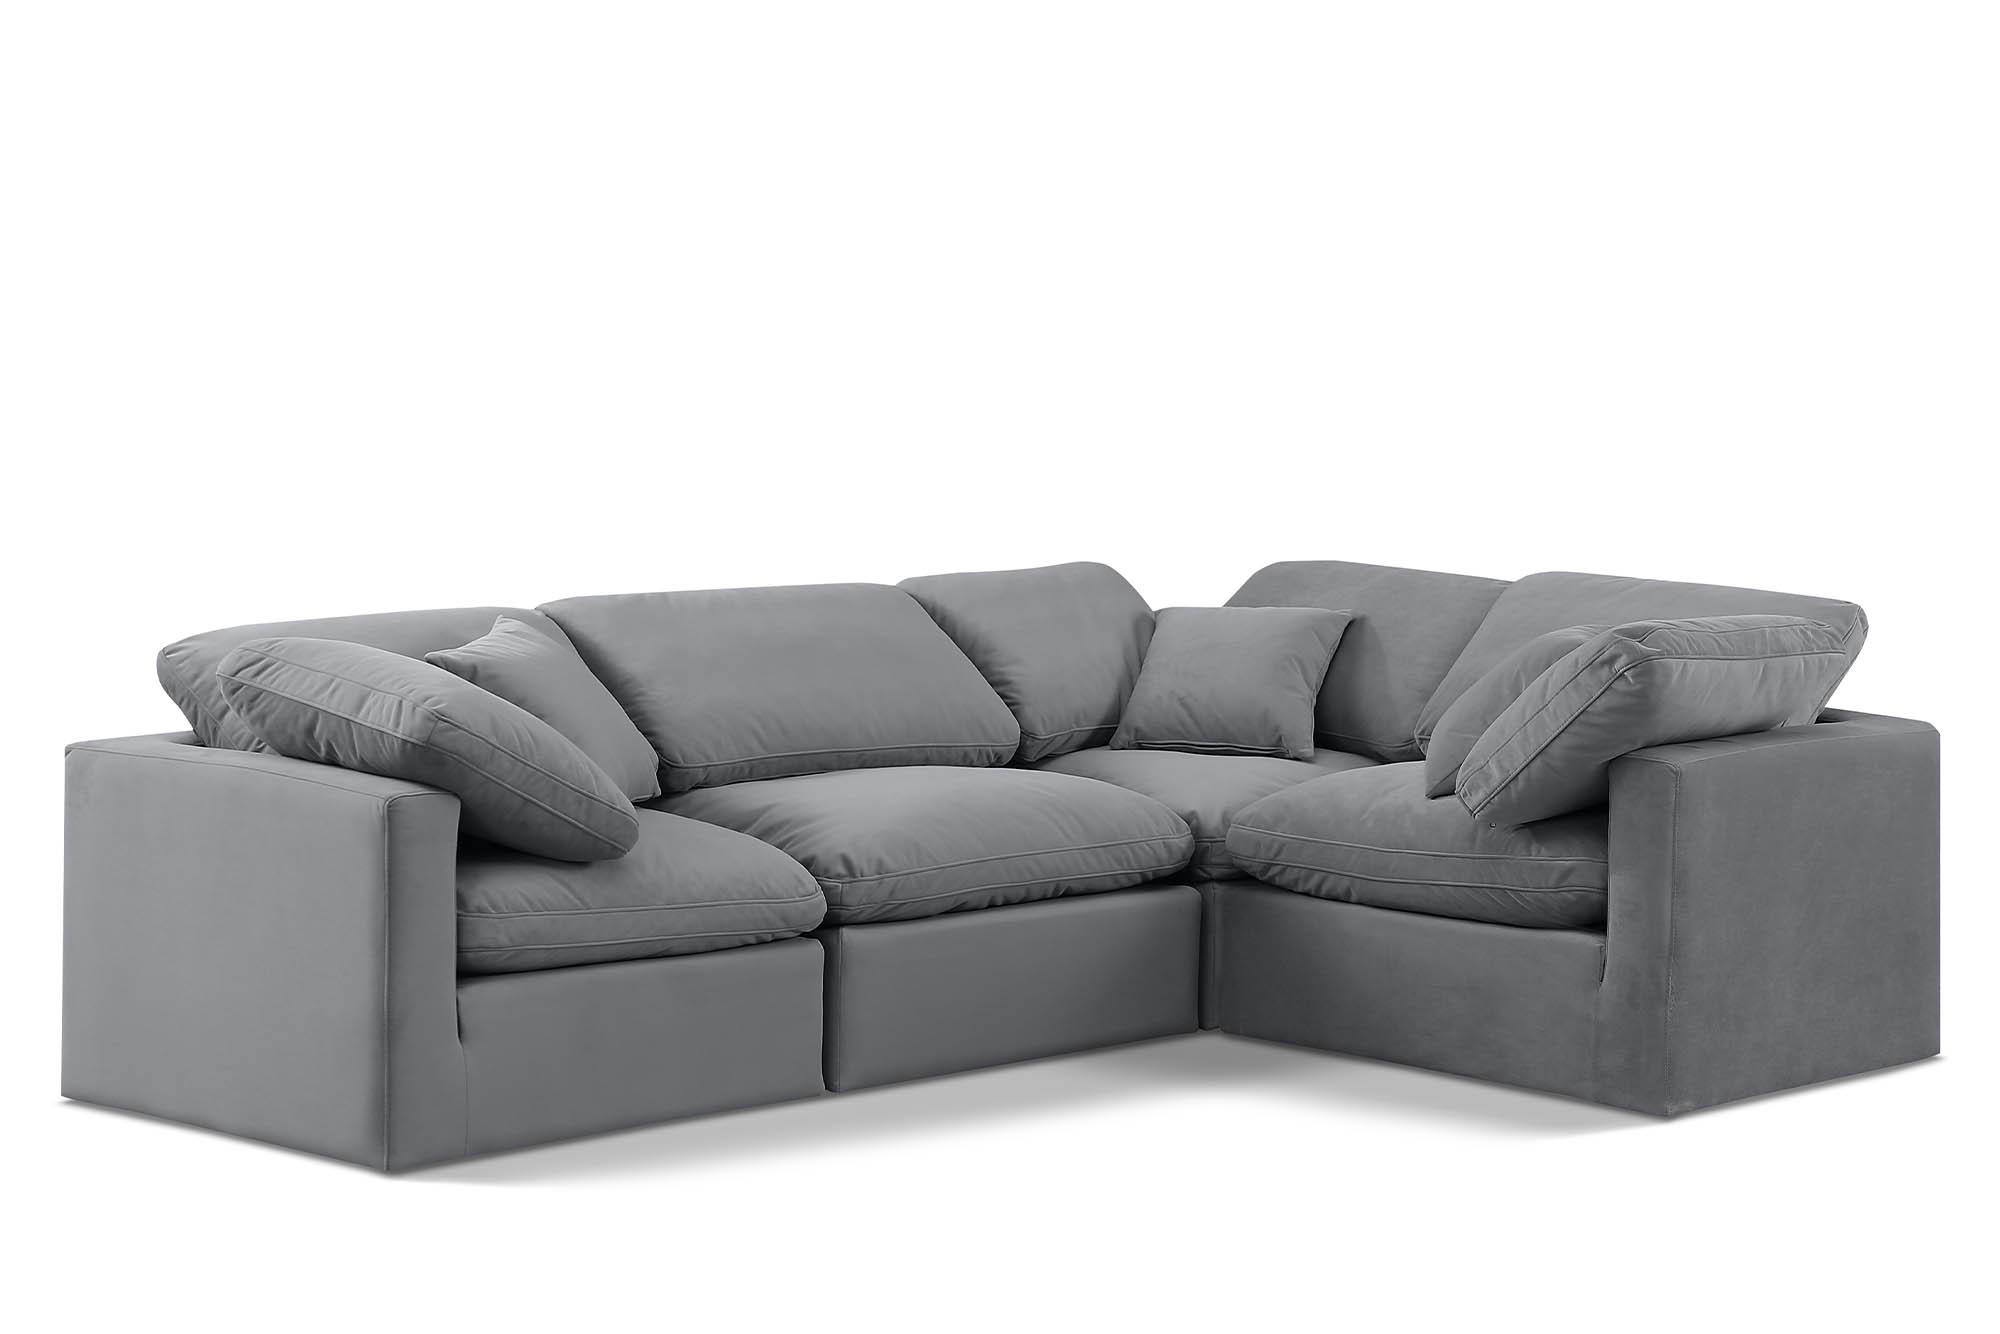 Contemporary, Modern Modular Sectional Sofa INDULGE 147Grey-Sec4C 147Grey-Sec4C in Gray Velvet